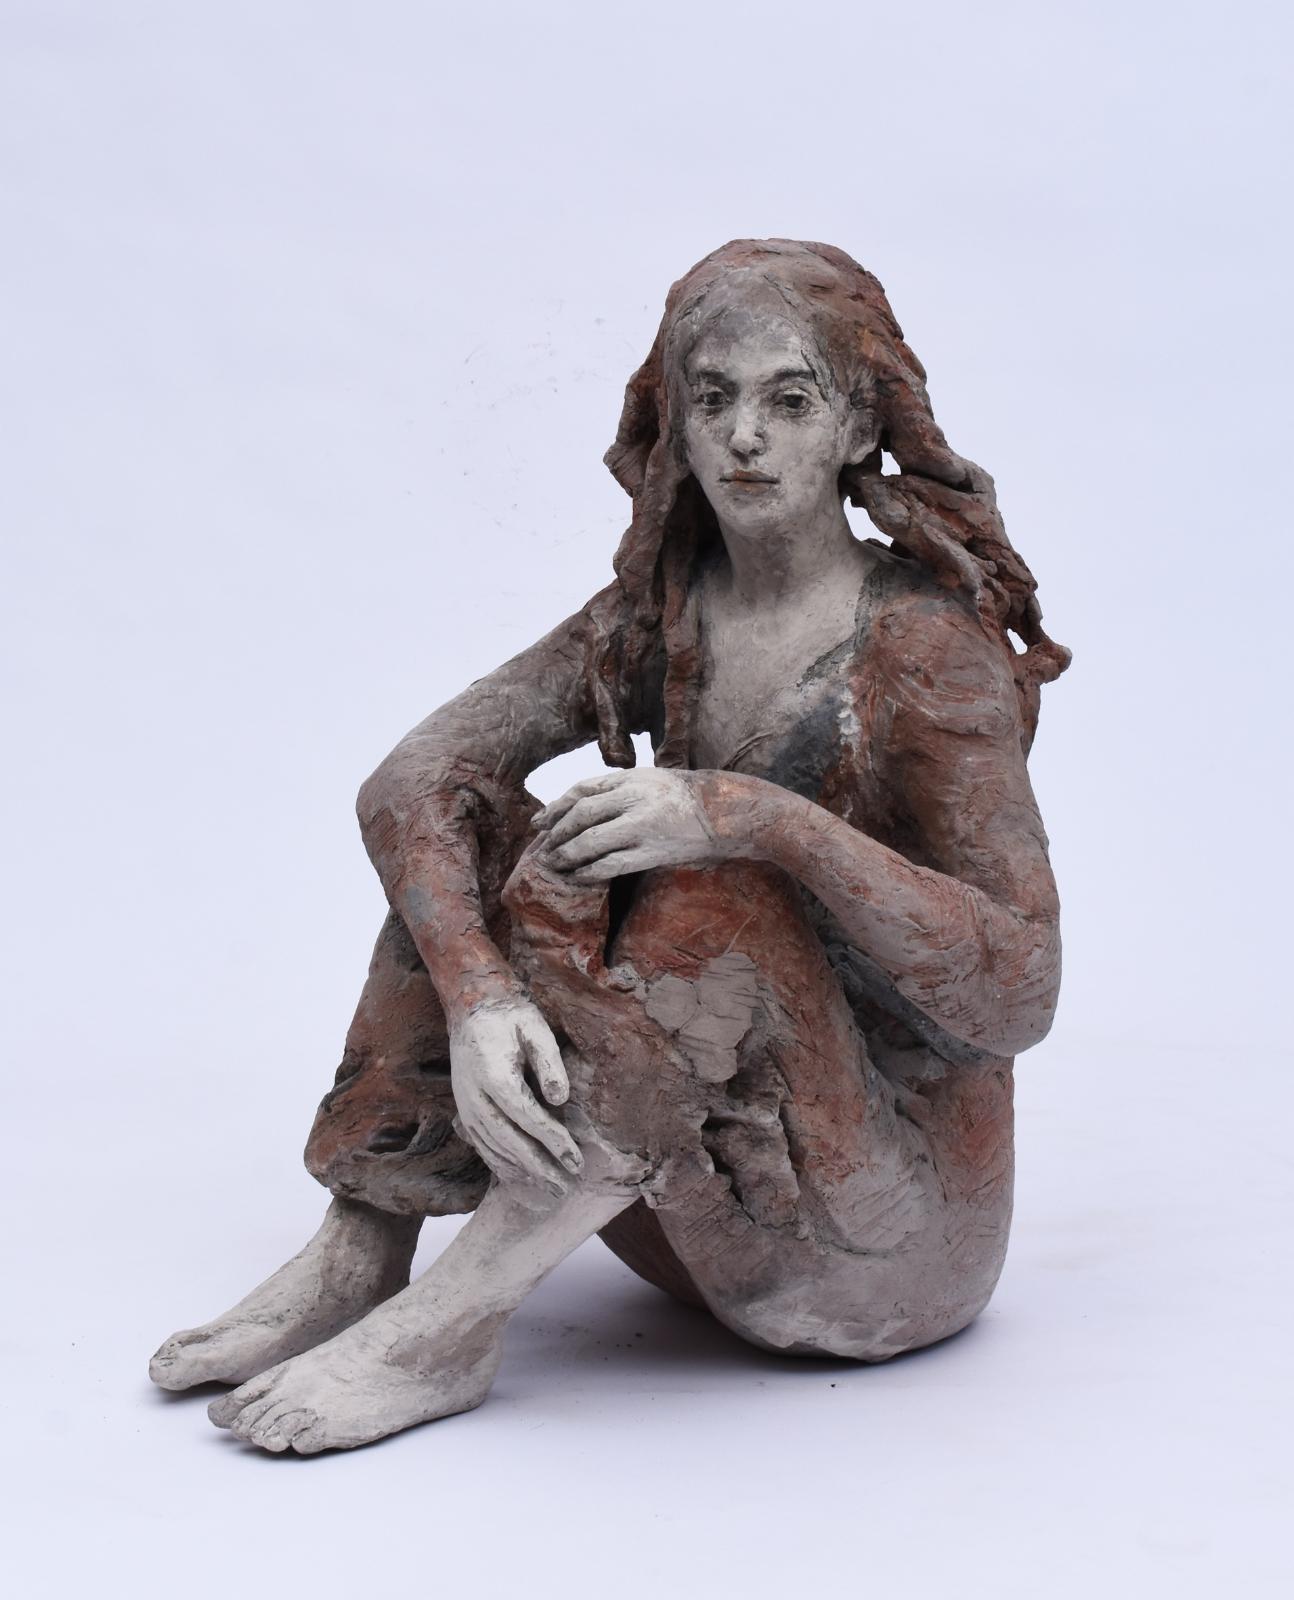 Silvia Siemes, gr. Sitzende, 2021, Terrakotta, H.: 72 cm, Preis auf Anfrage, sis012ko